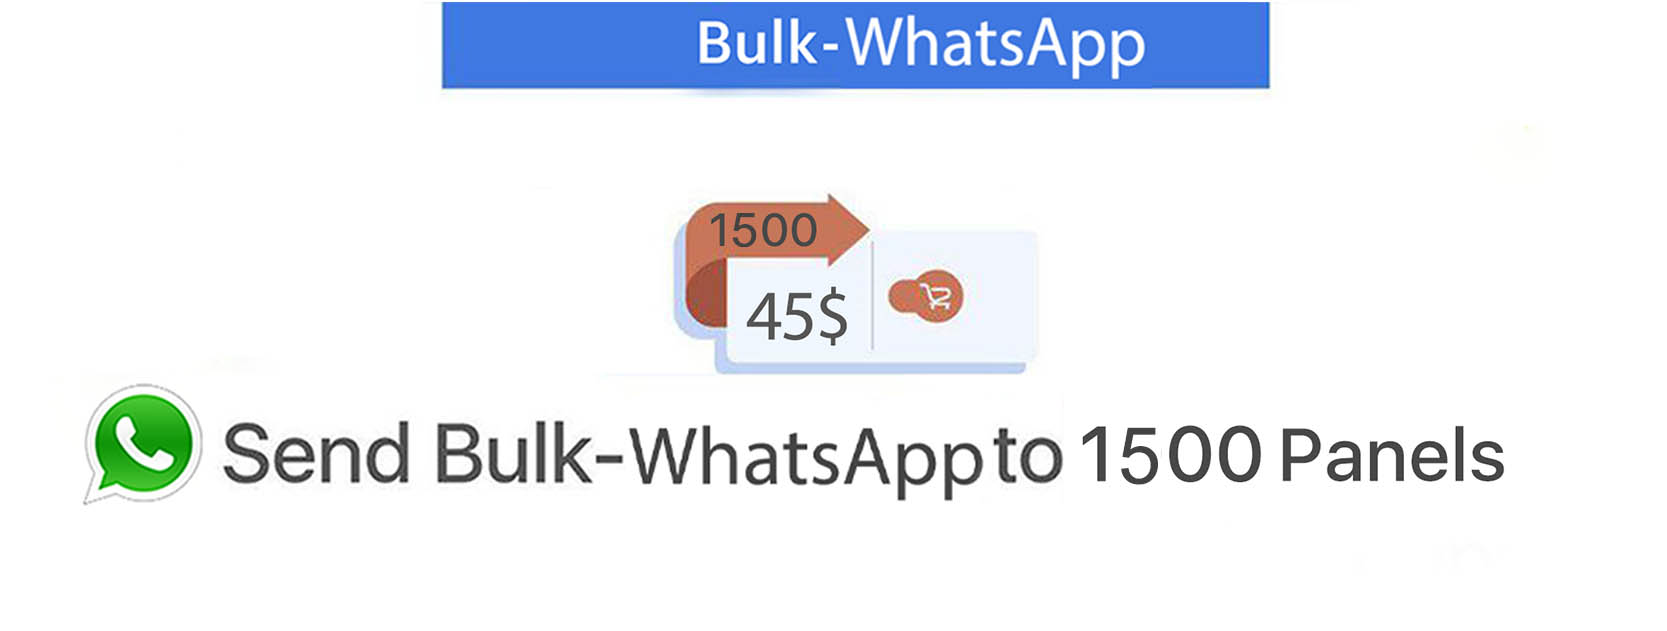 Bulk-Whatsapp - 1500 Panels